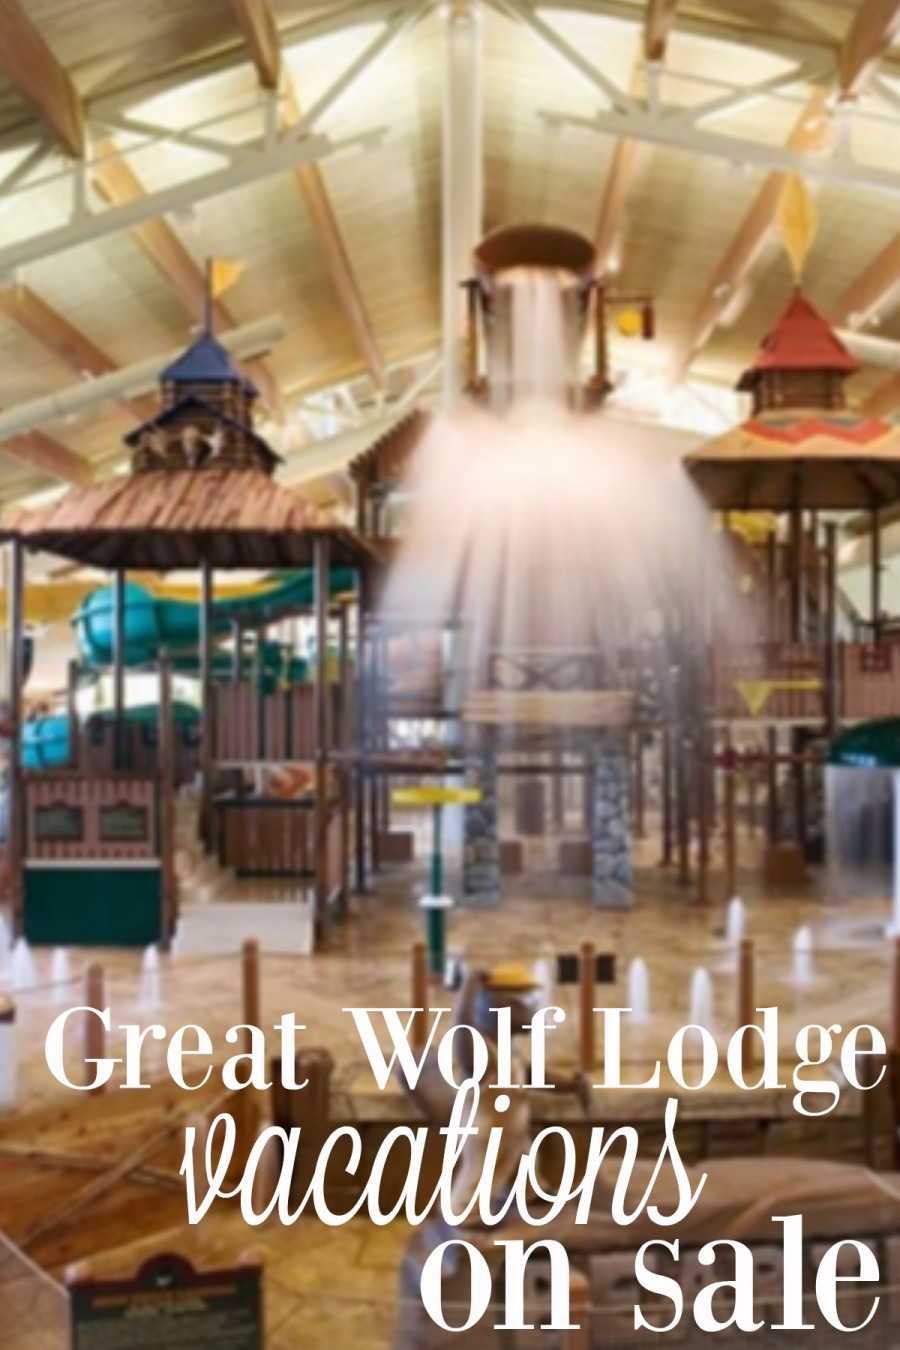 greatwolf lodge groupon